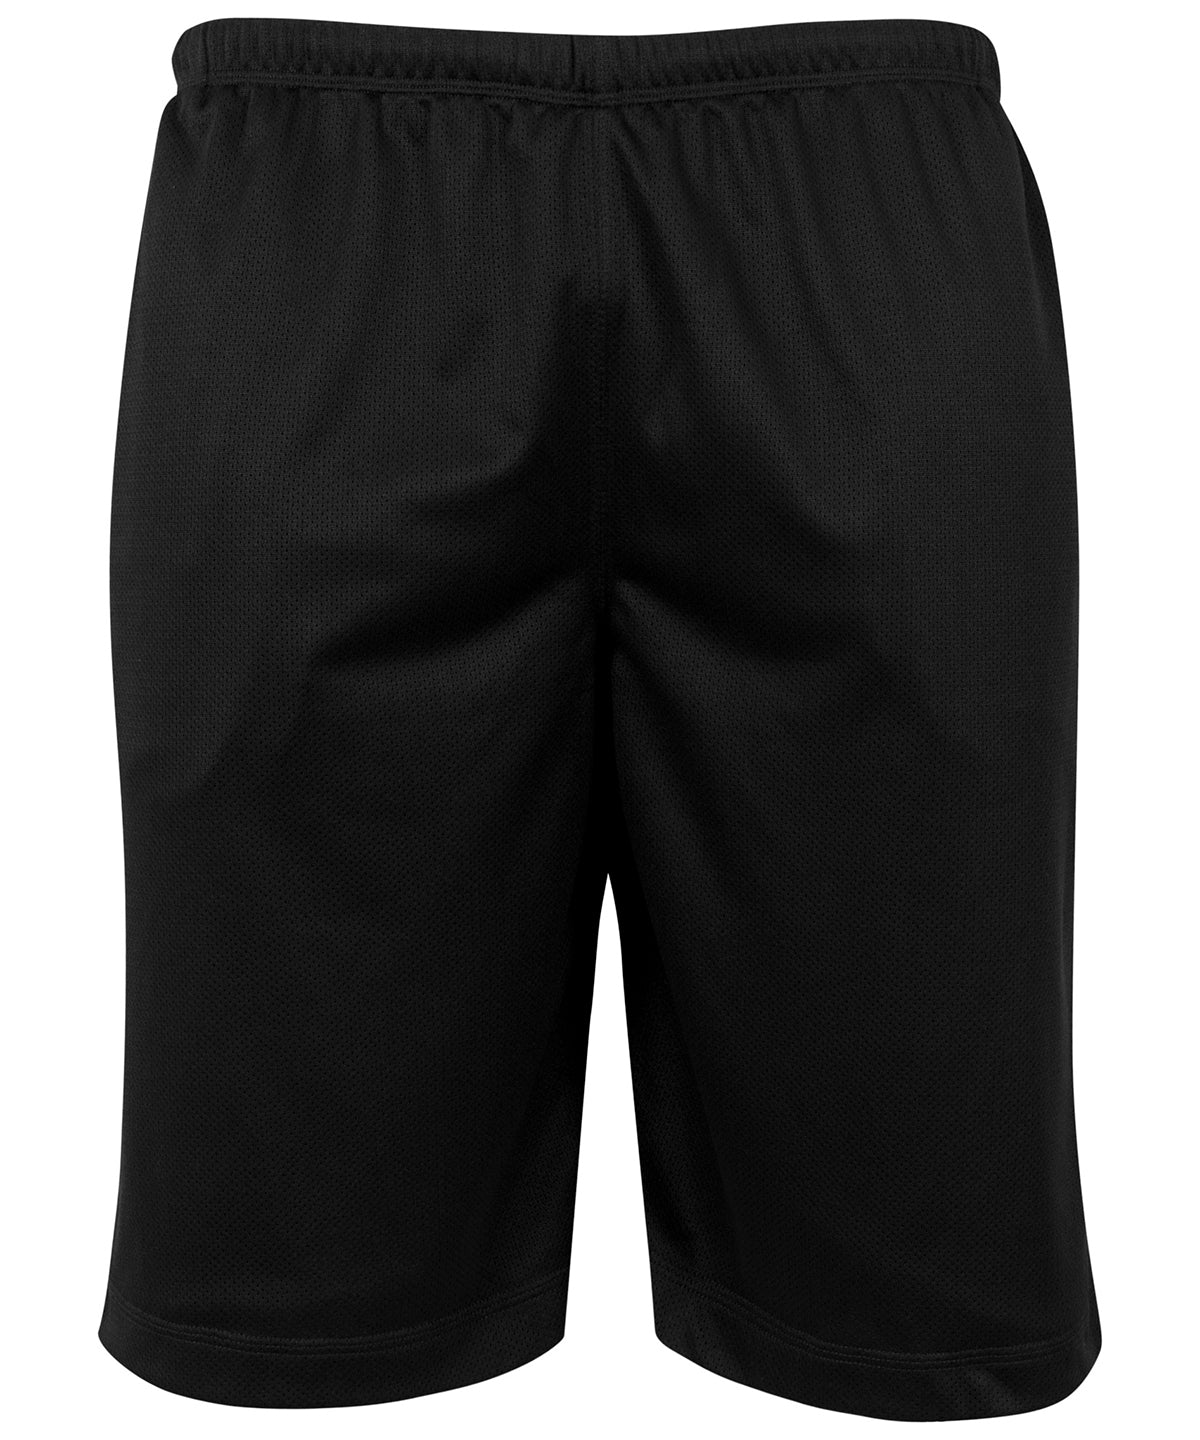 Personalised Shorts - Black Build Your Brand Mesh shorts